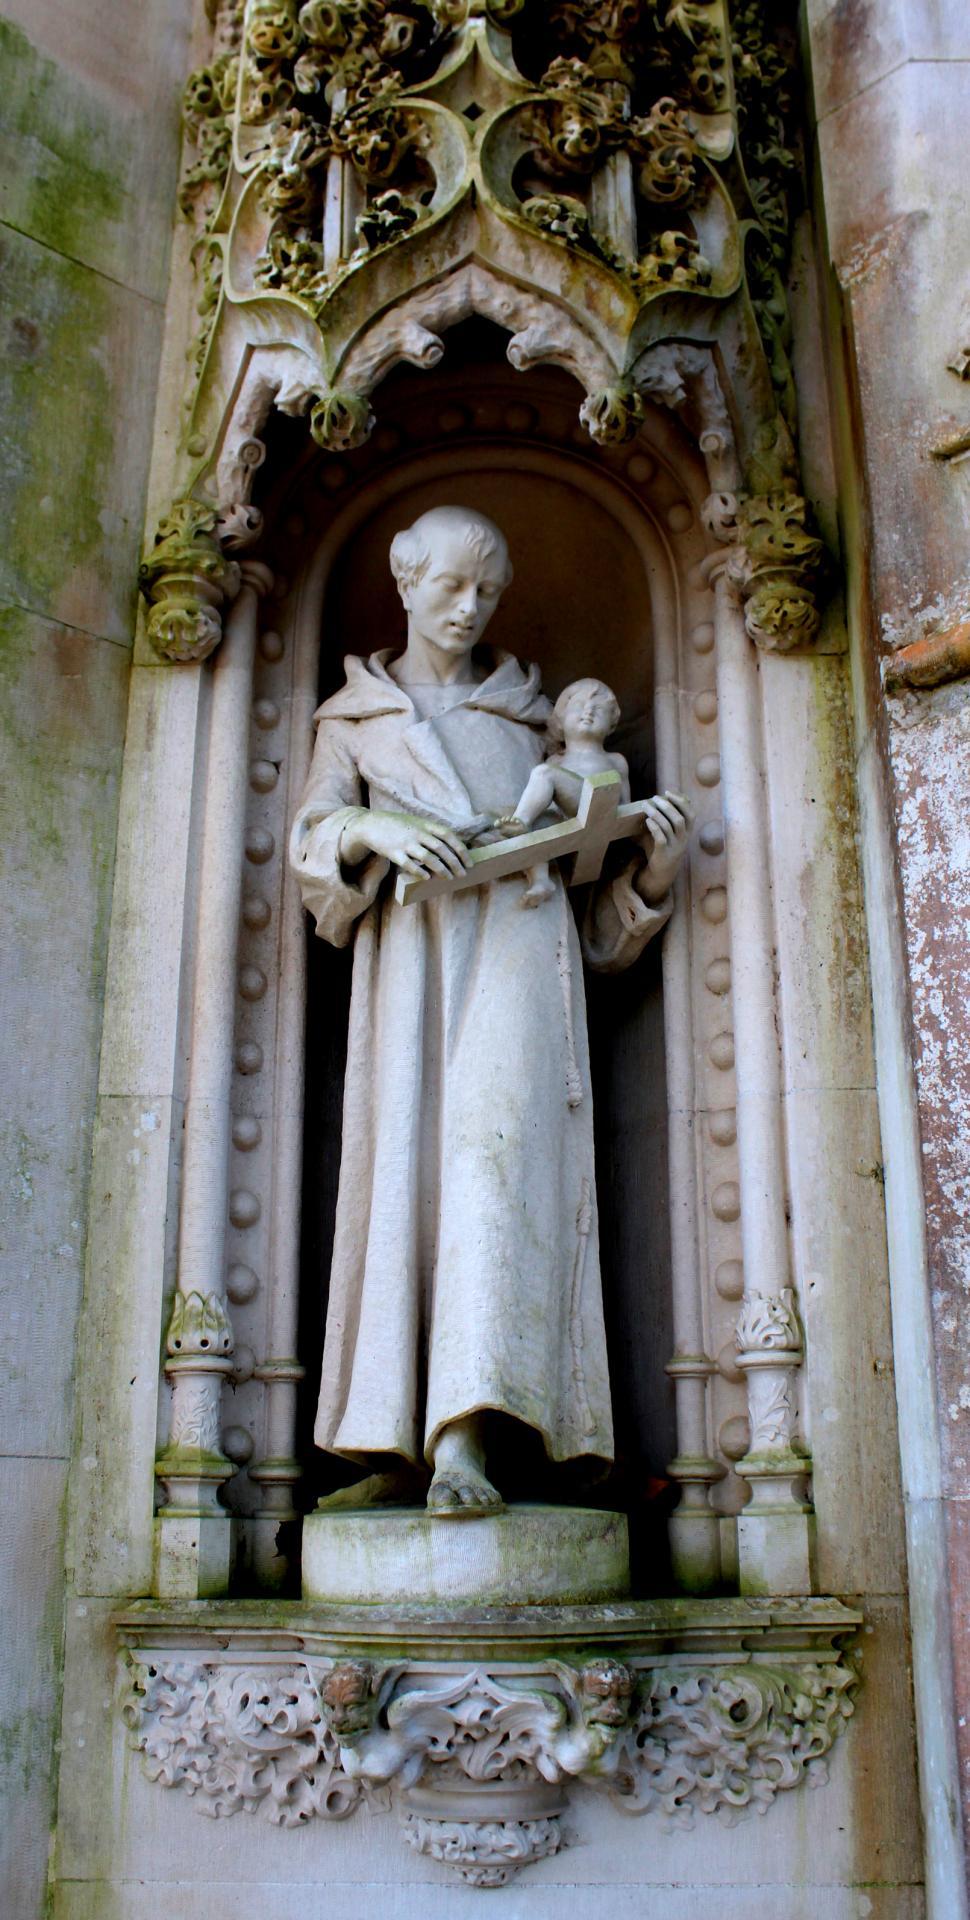 Free Image of Statue of Saint Joseph holding Baby Jesus 